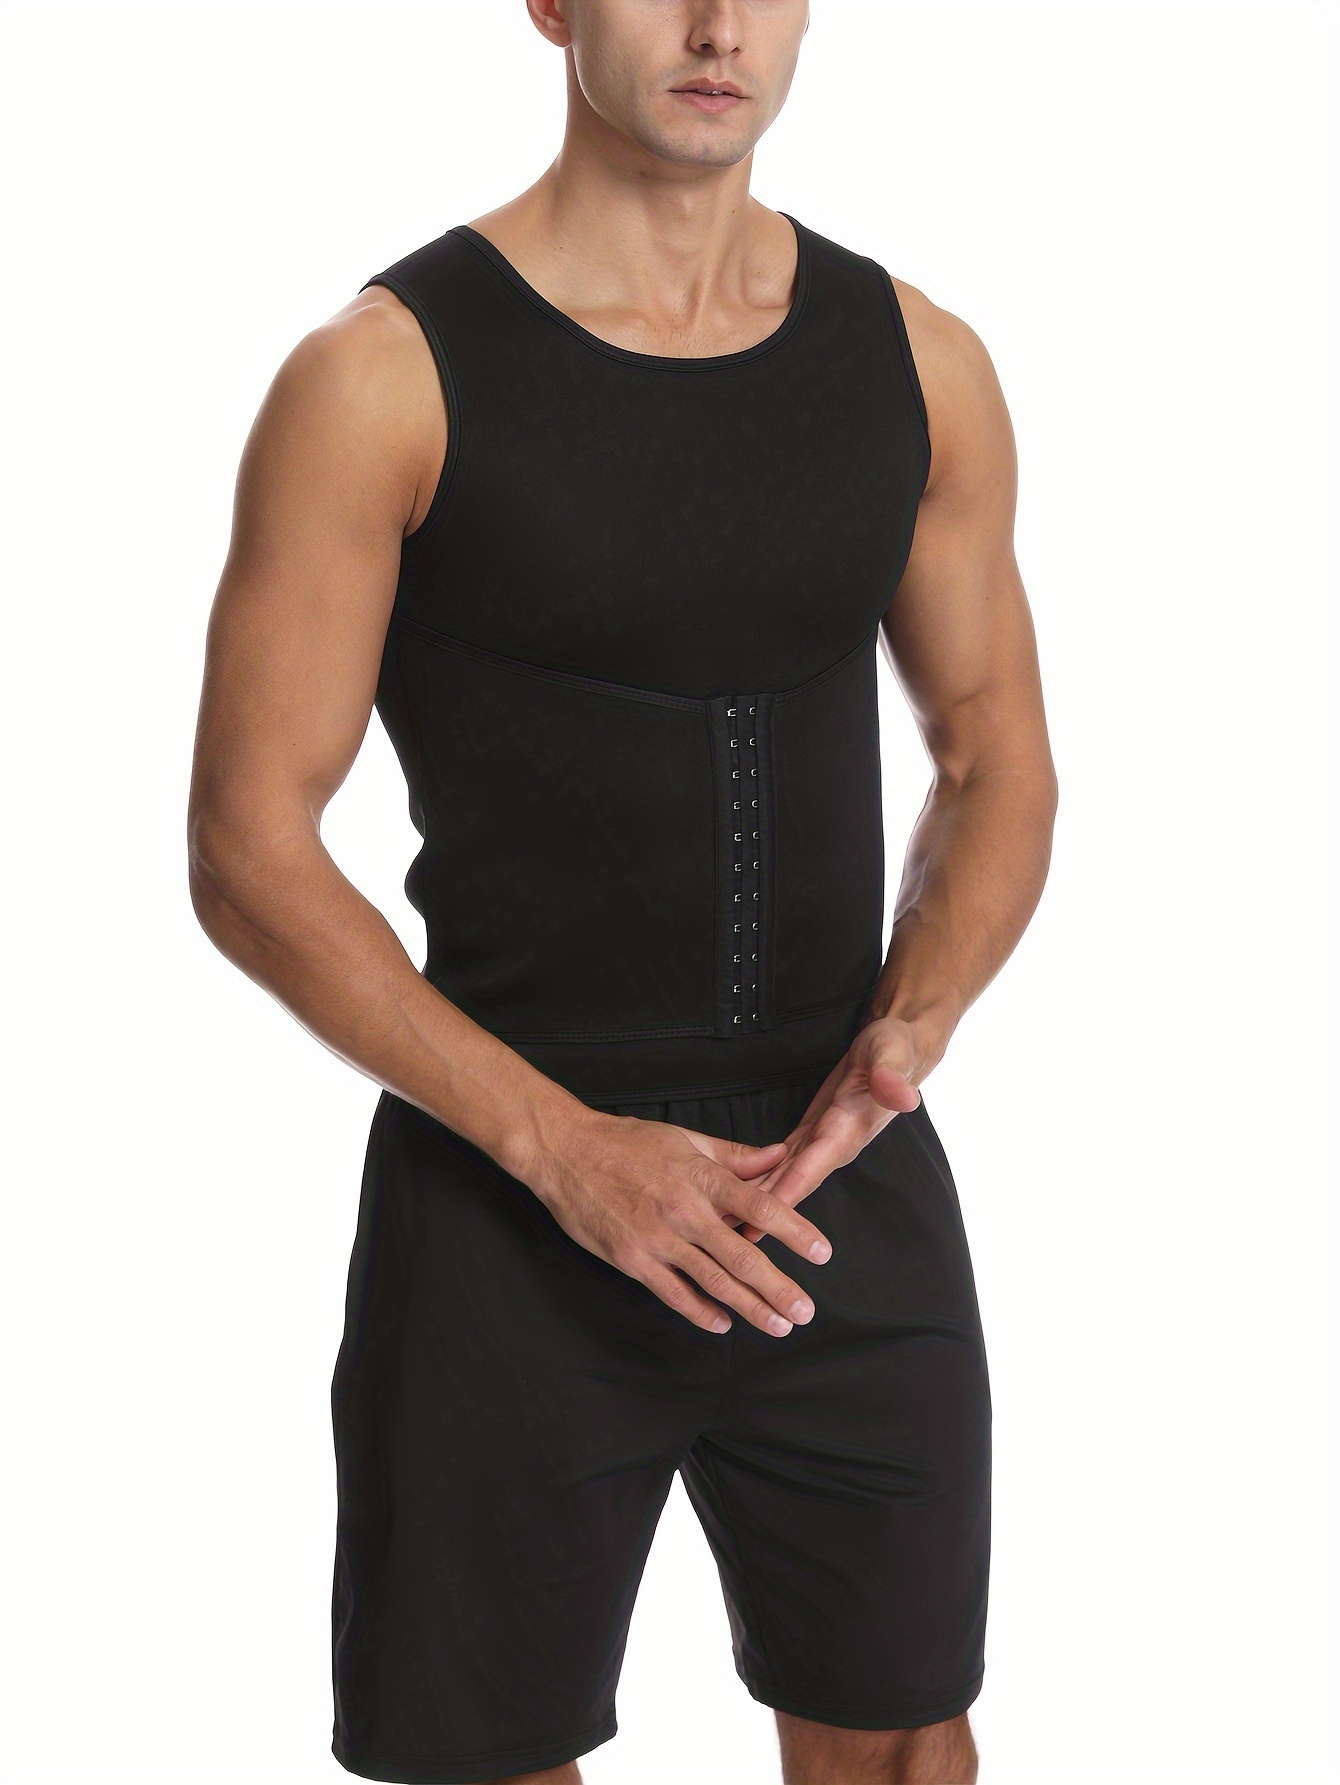 Cheap Men's Sweat Vest Waist Trainer Tank Top for Workout Body